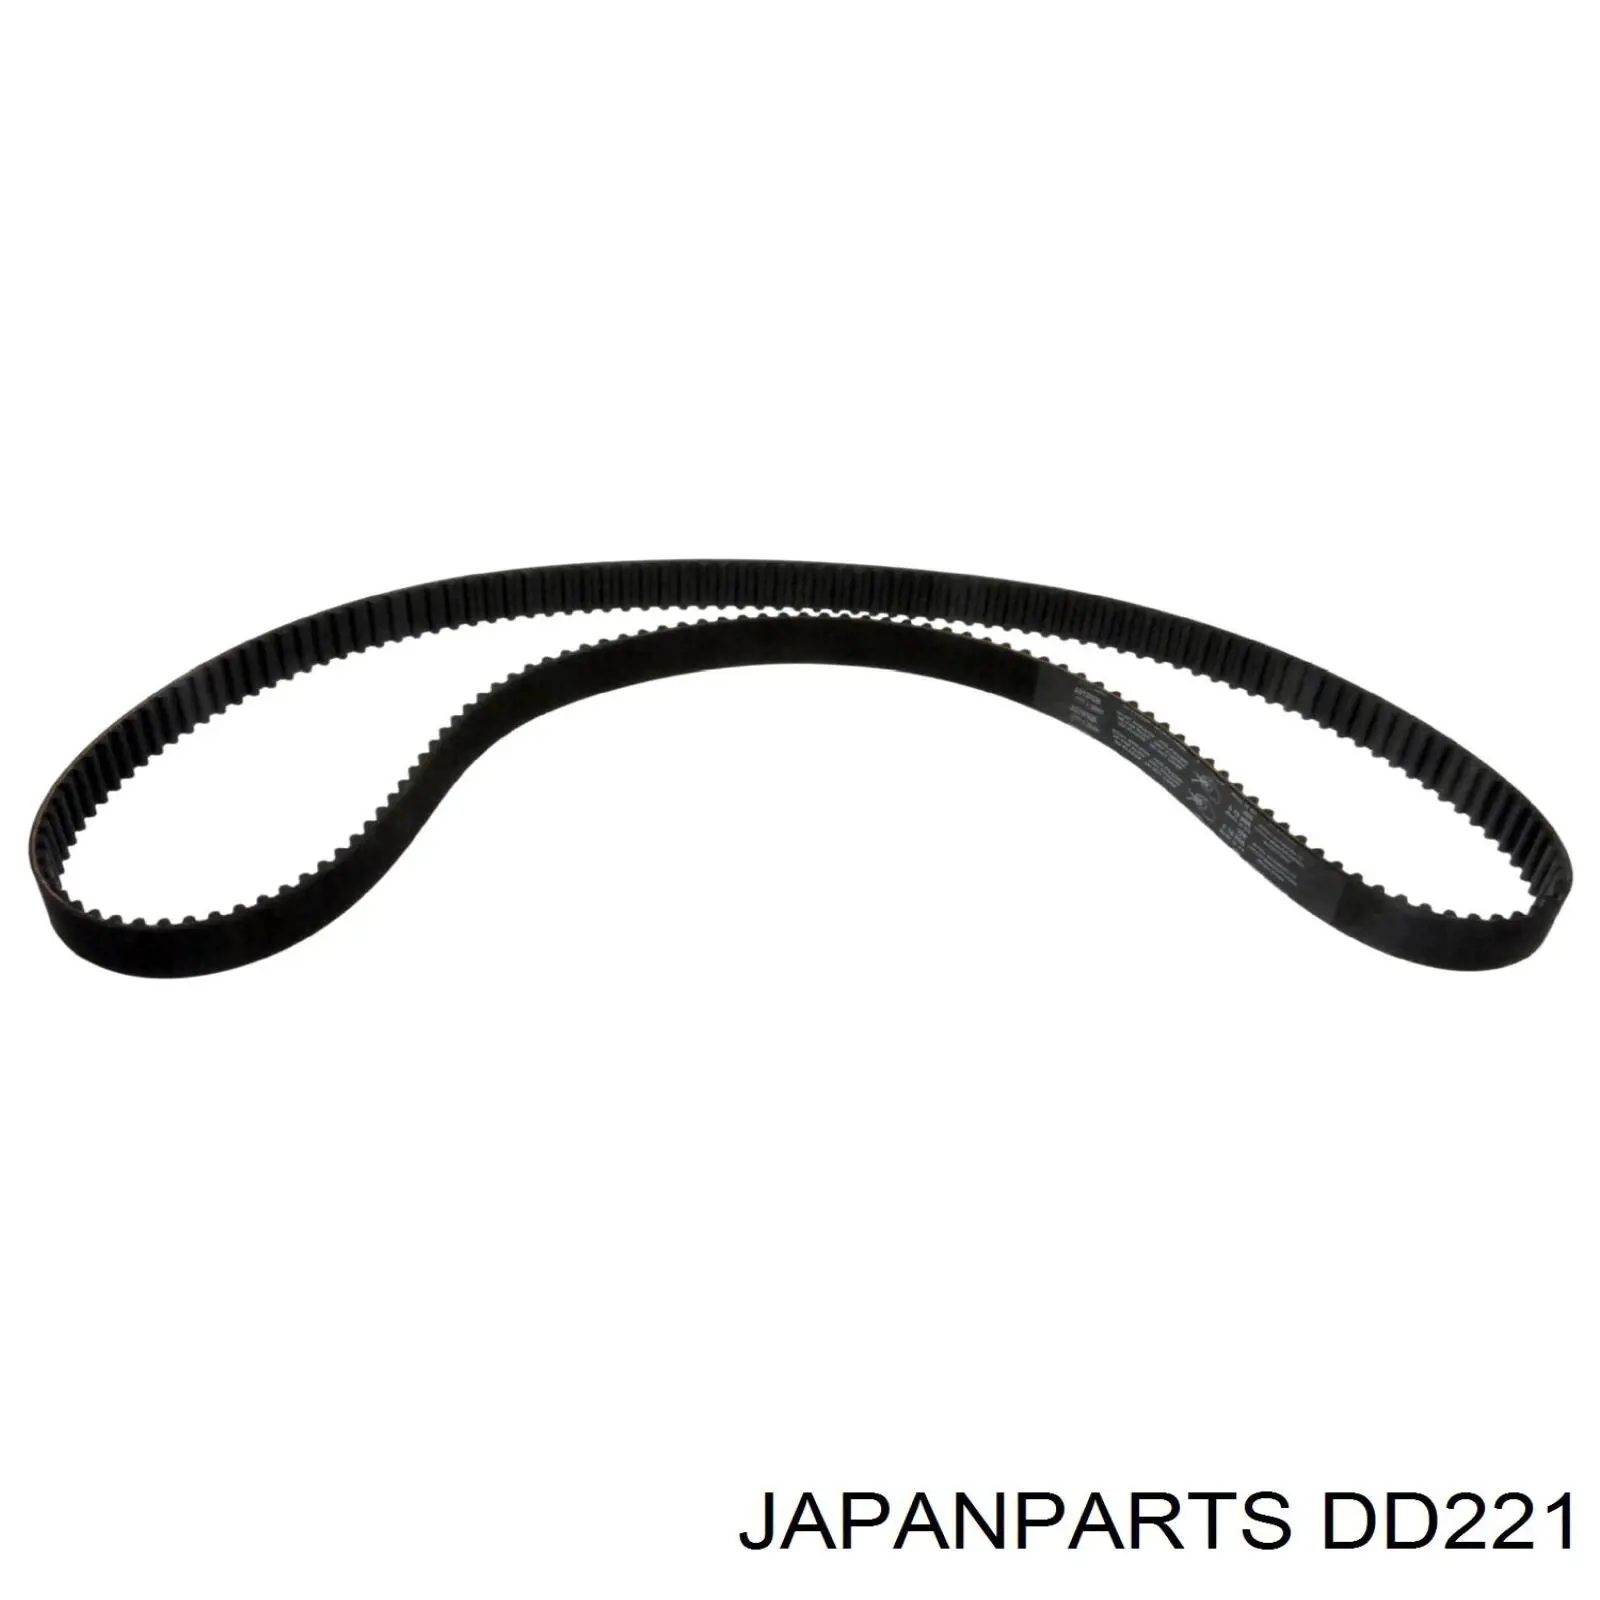 DD-221 Japan Parts ремень грм